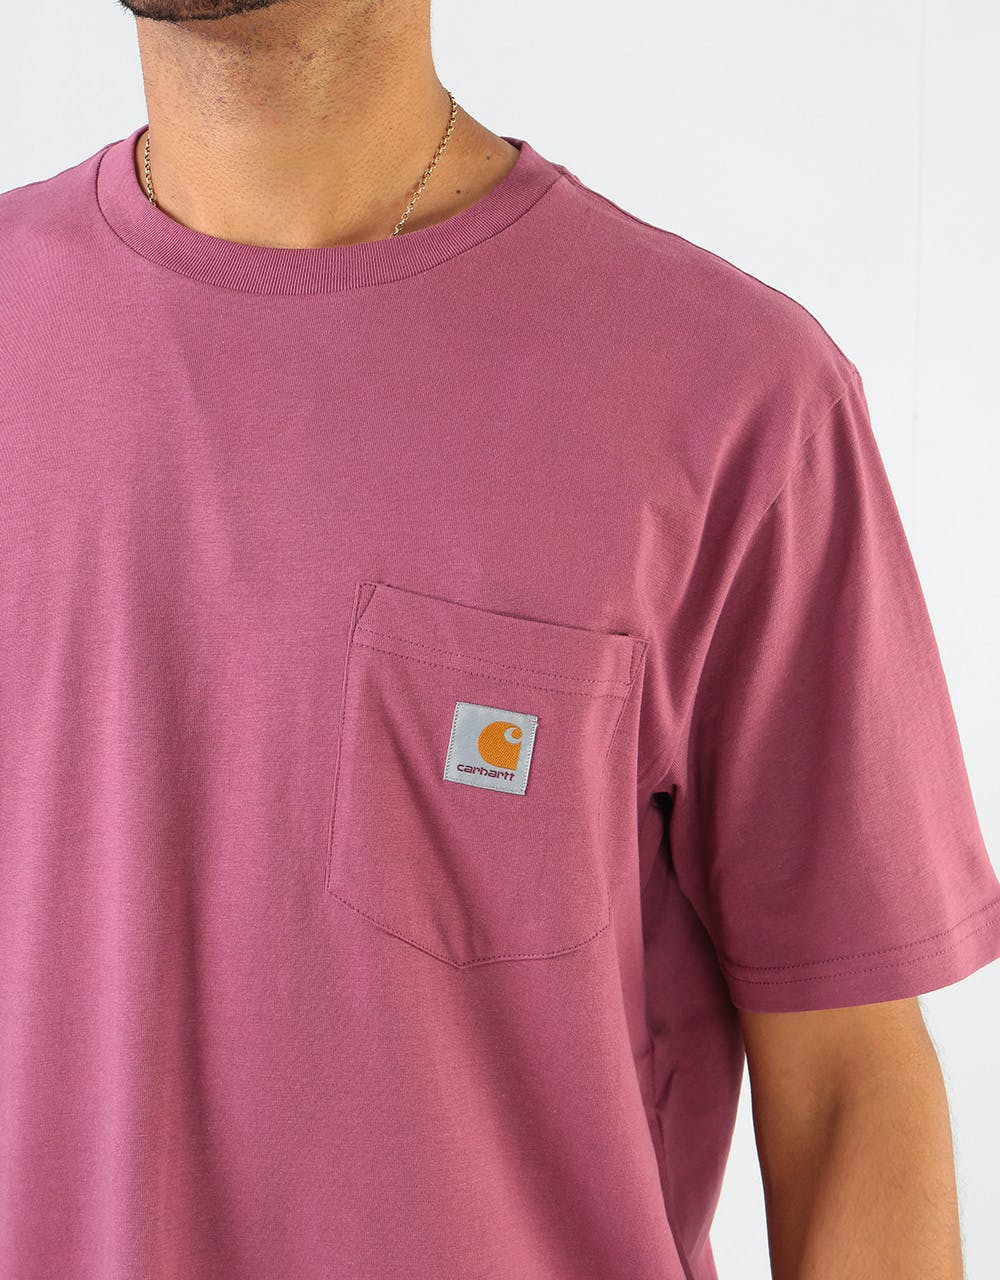 Carhartt WIP S/S Pocket T-Shirt - Dusty Fuschsia